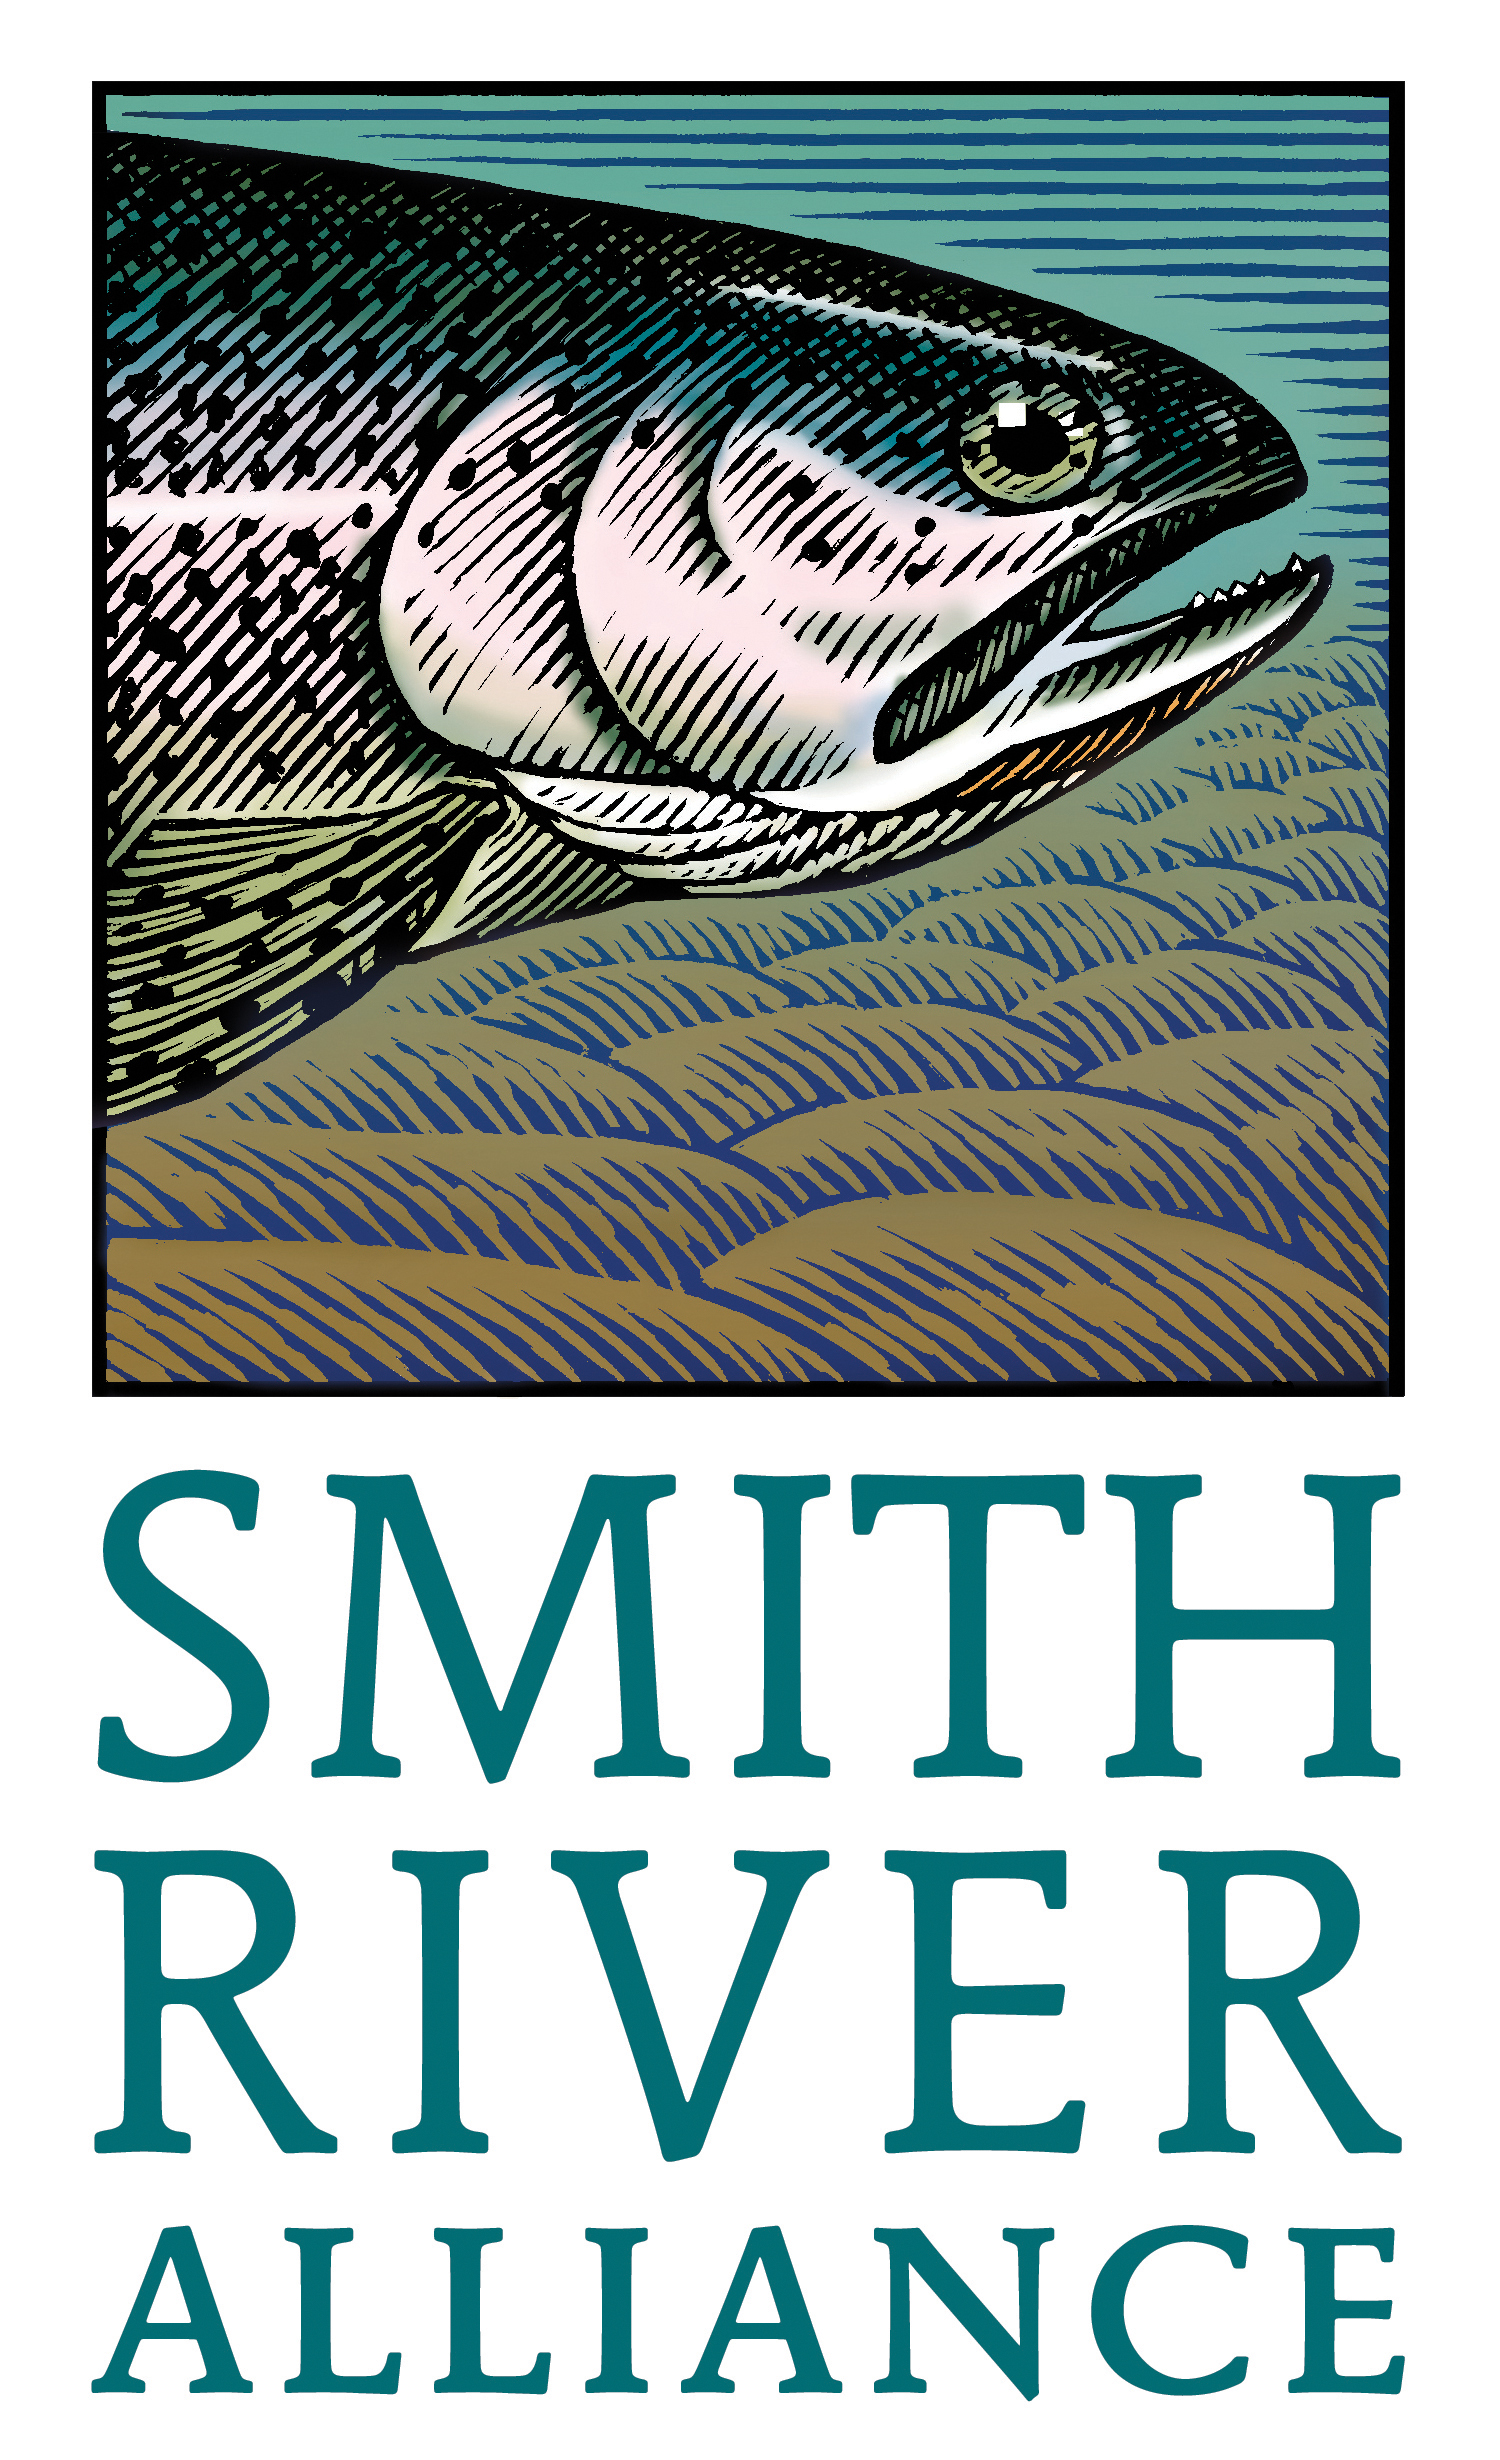 Smith River Alliance